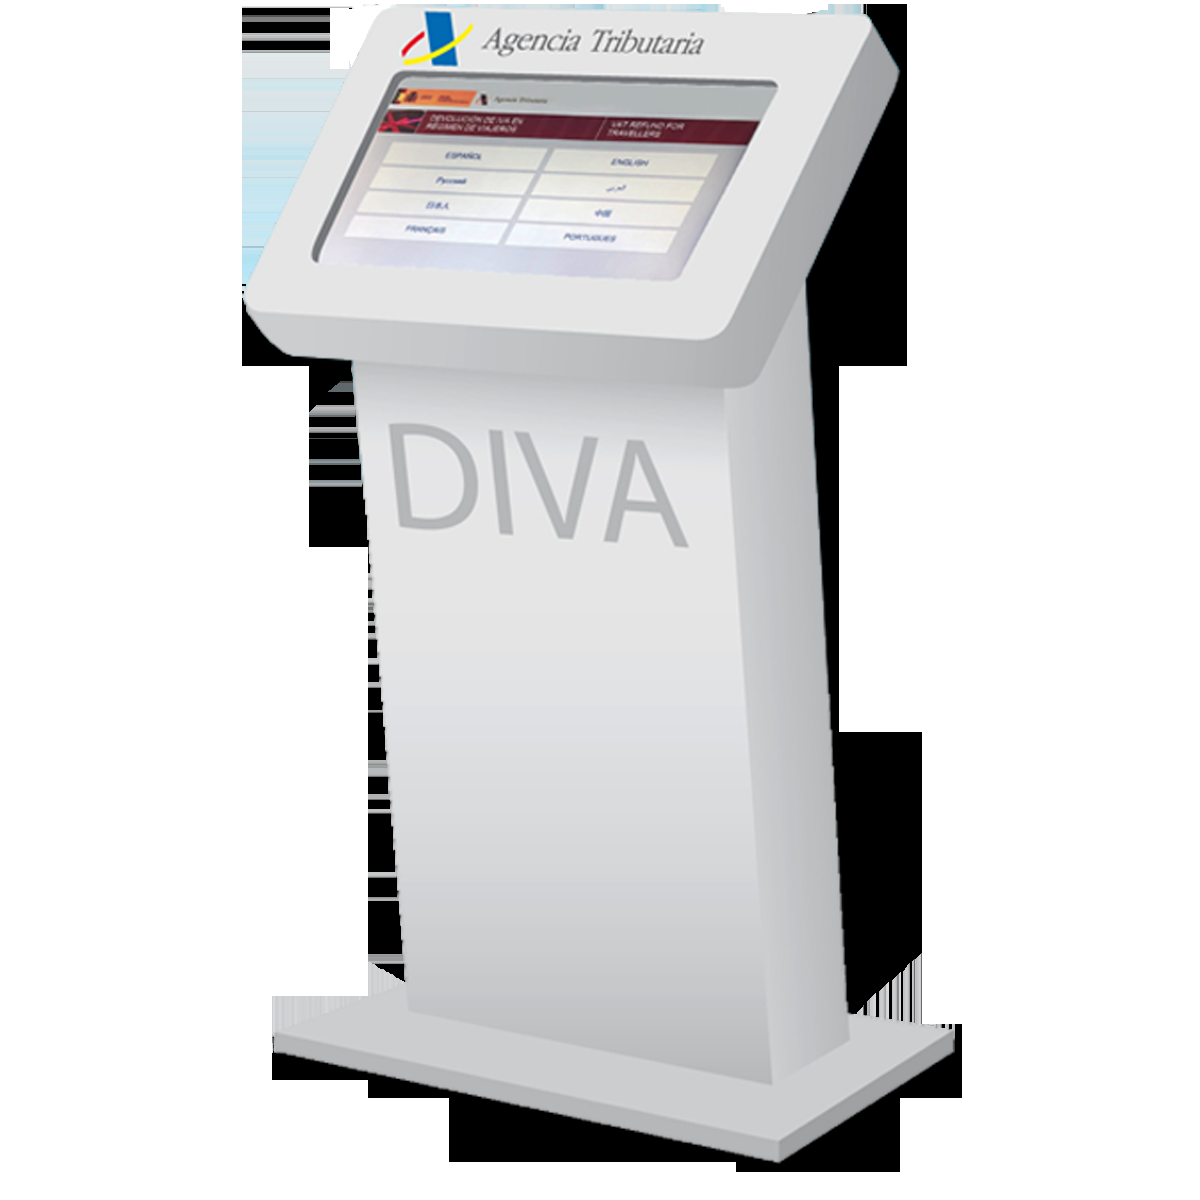 Вид аппарата сканирования чеков DIVA